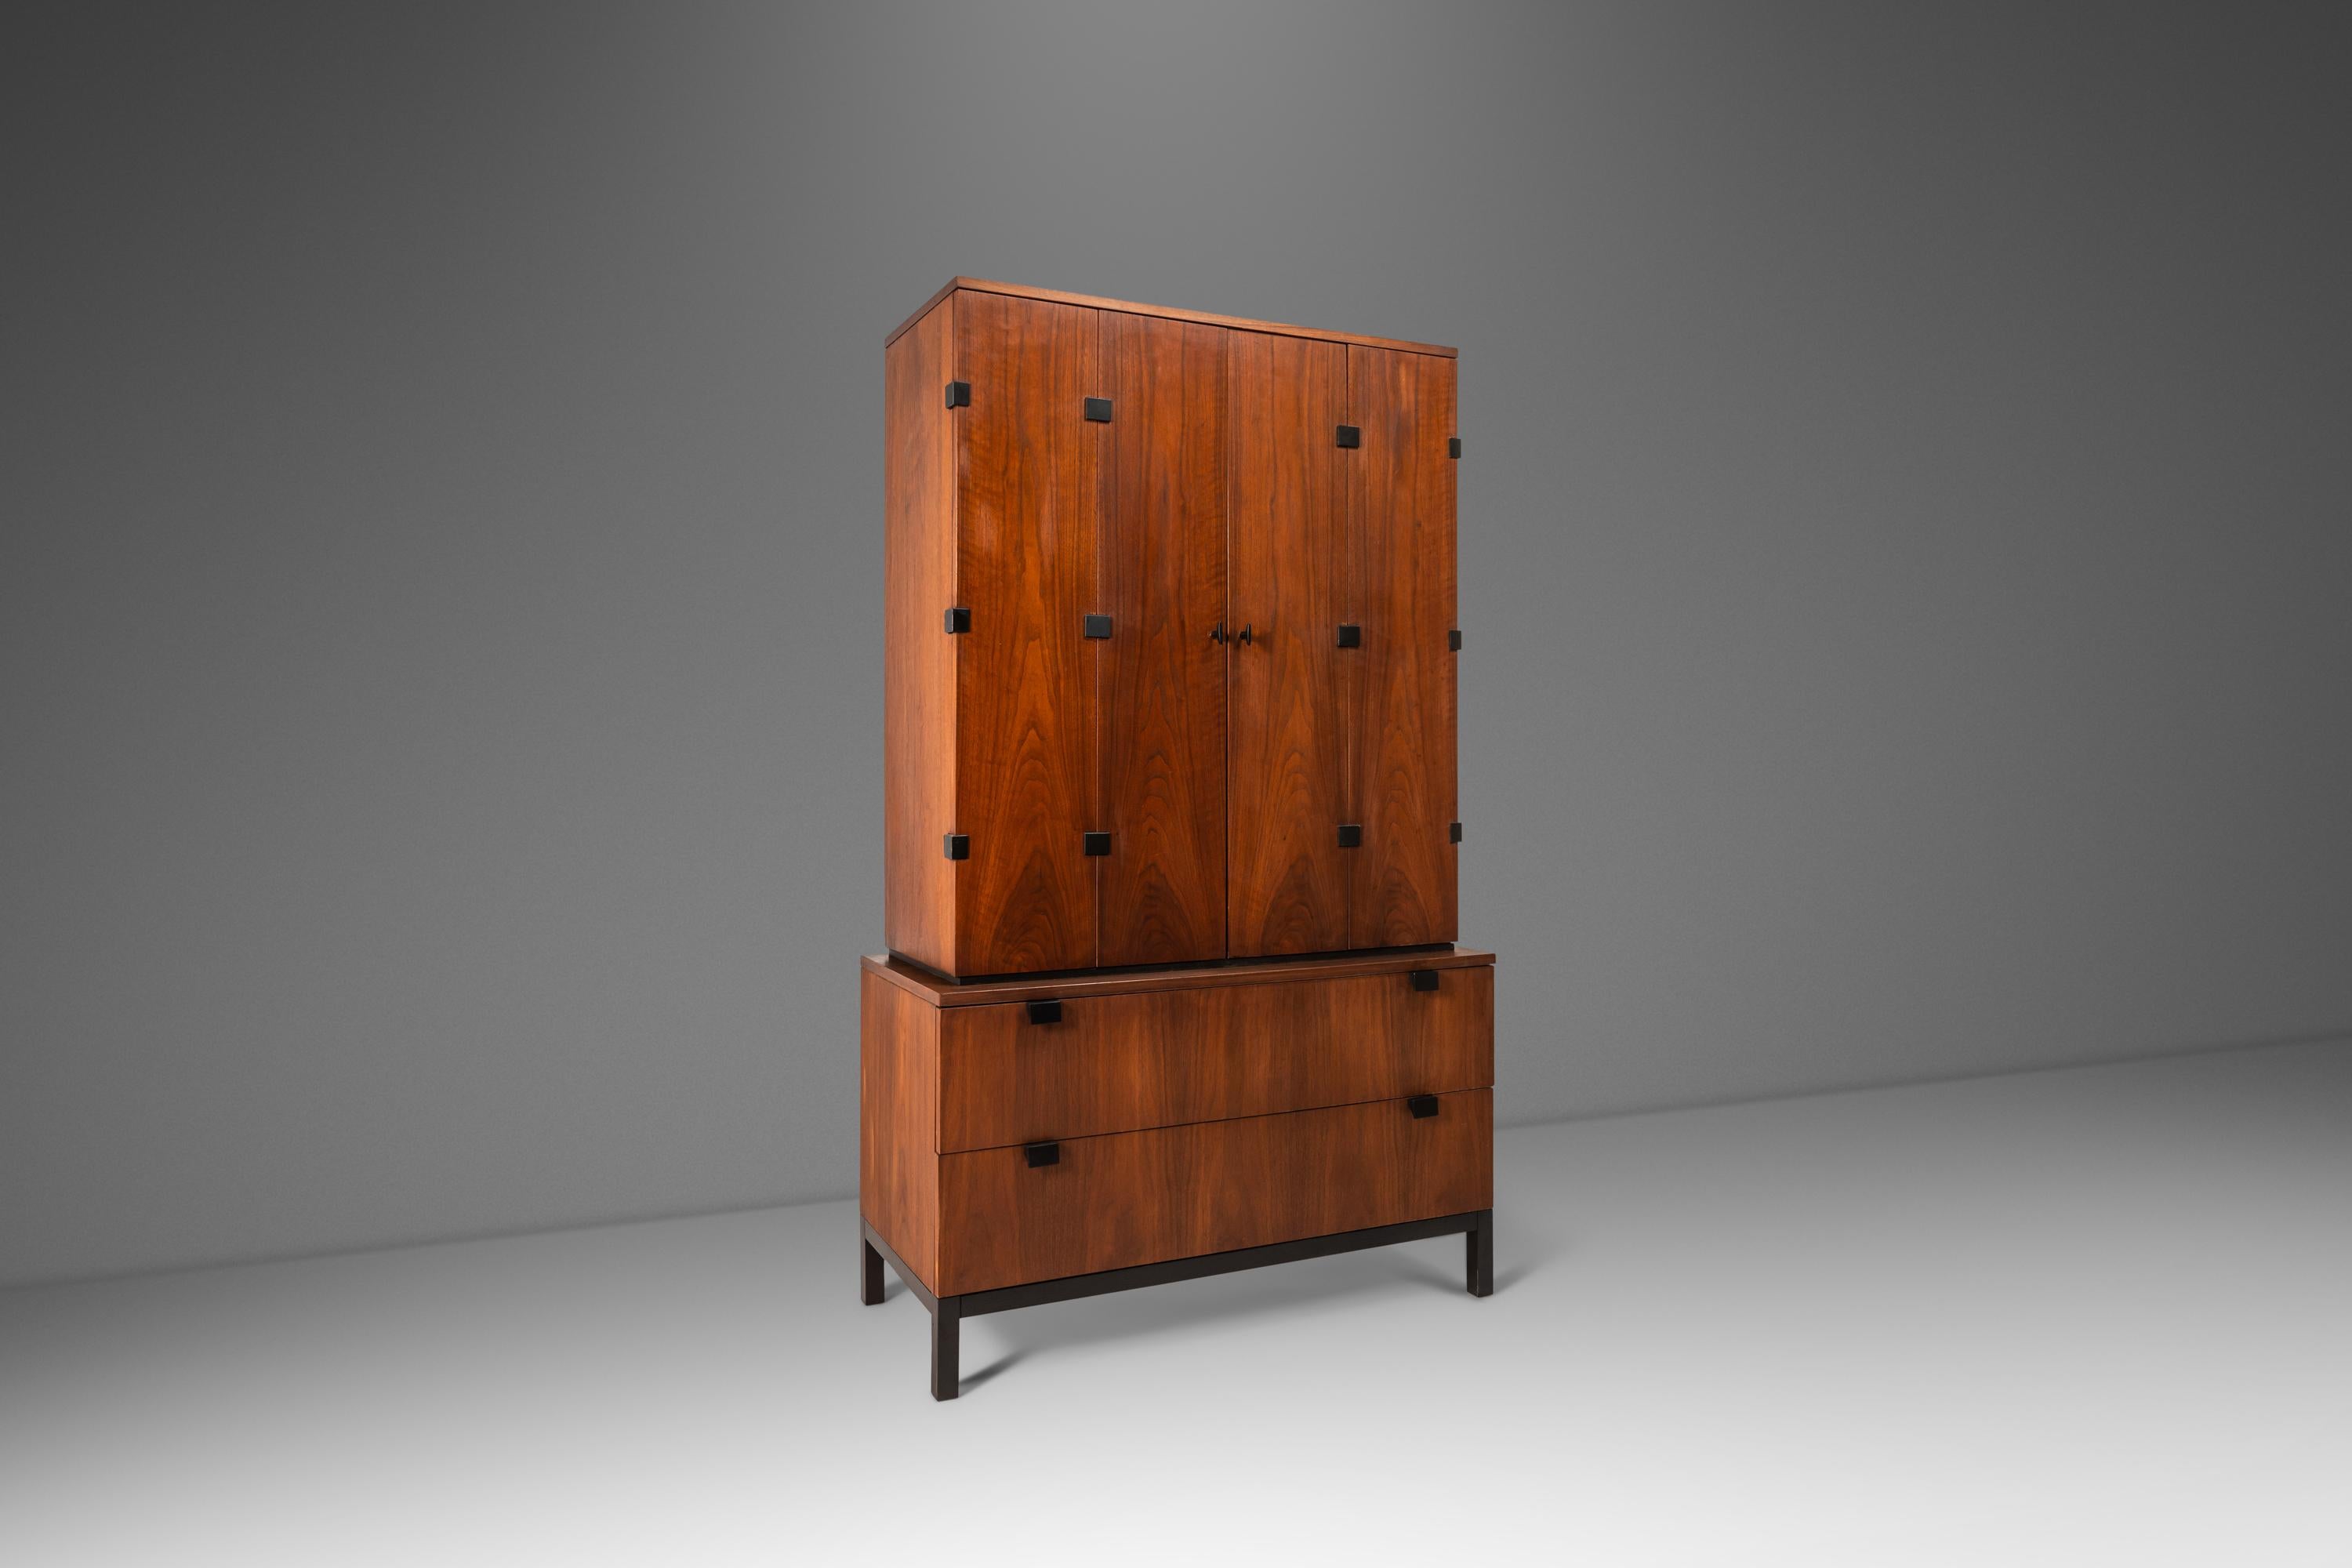 Wood Gentlemen's Chest / Dresser in Walnut by Milo Baughman for Directional, c. 1960s